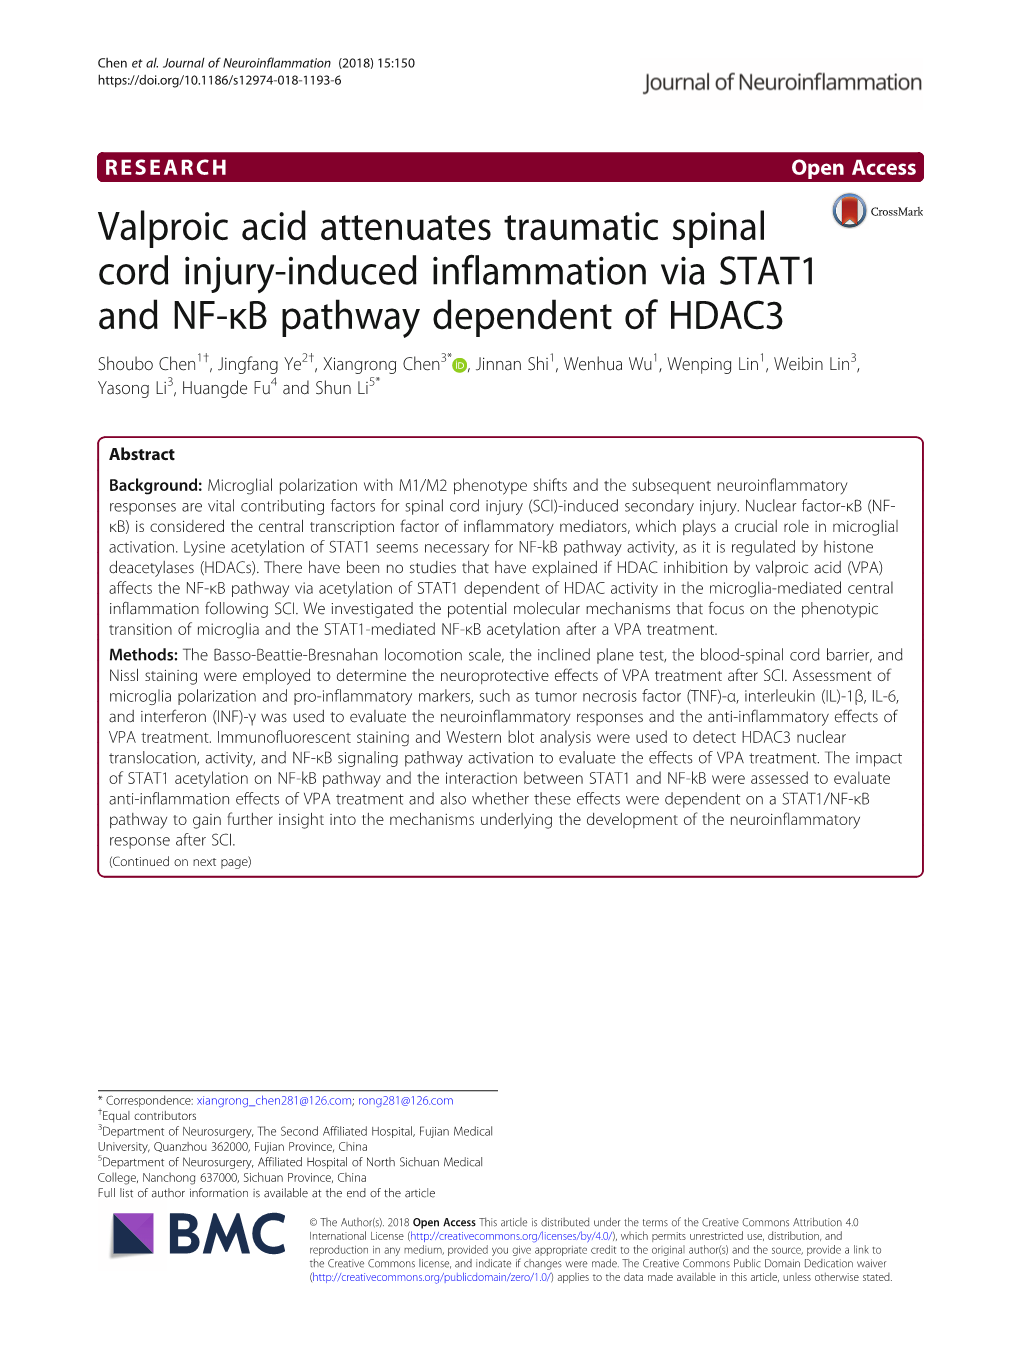 Valproic Acid Attenuates Traumatic